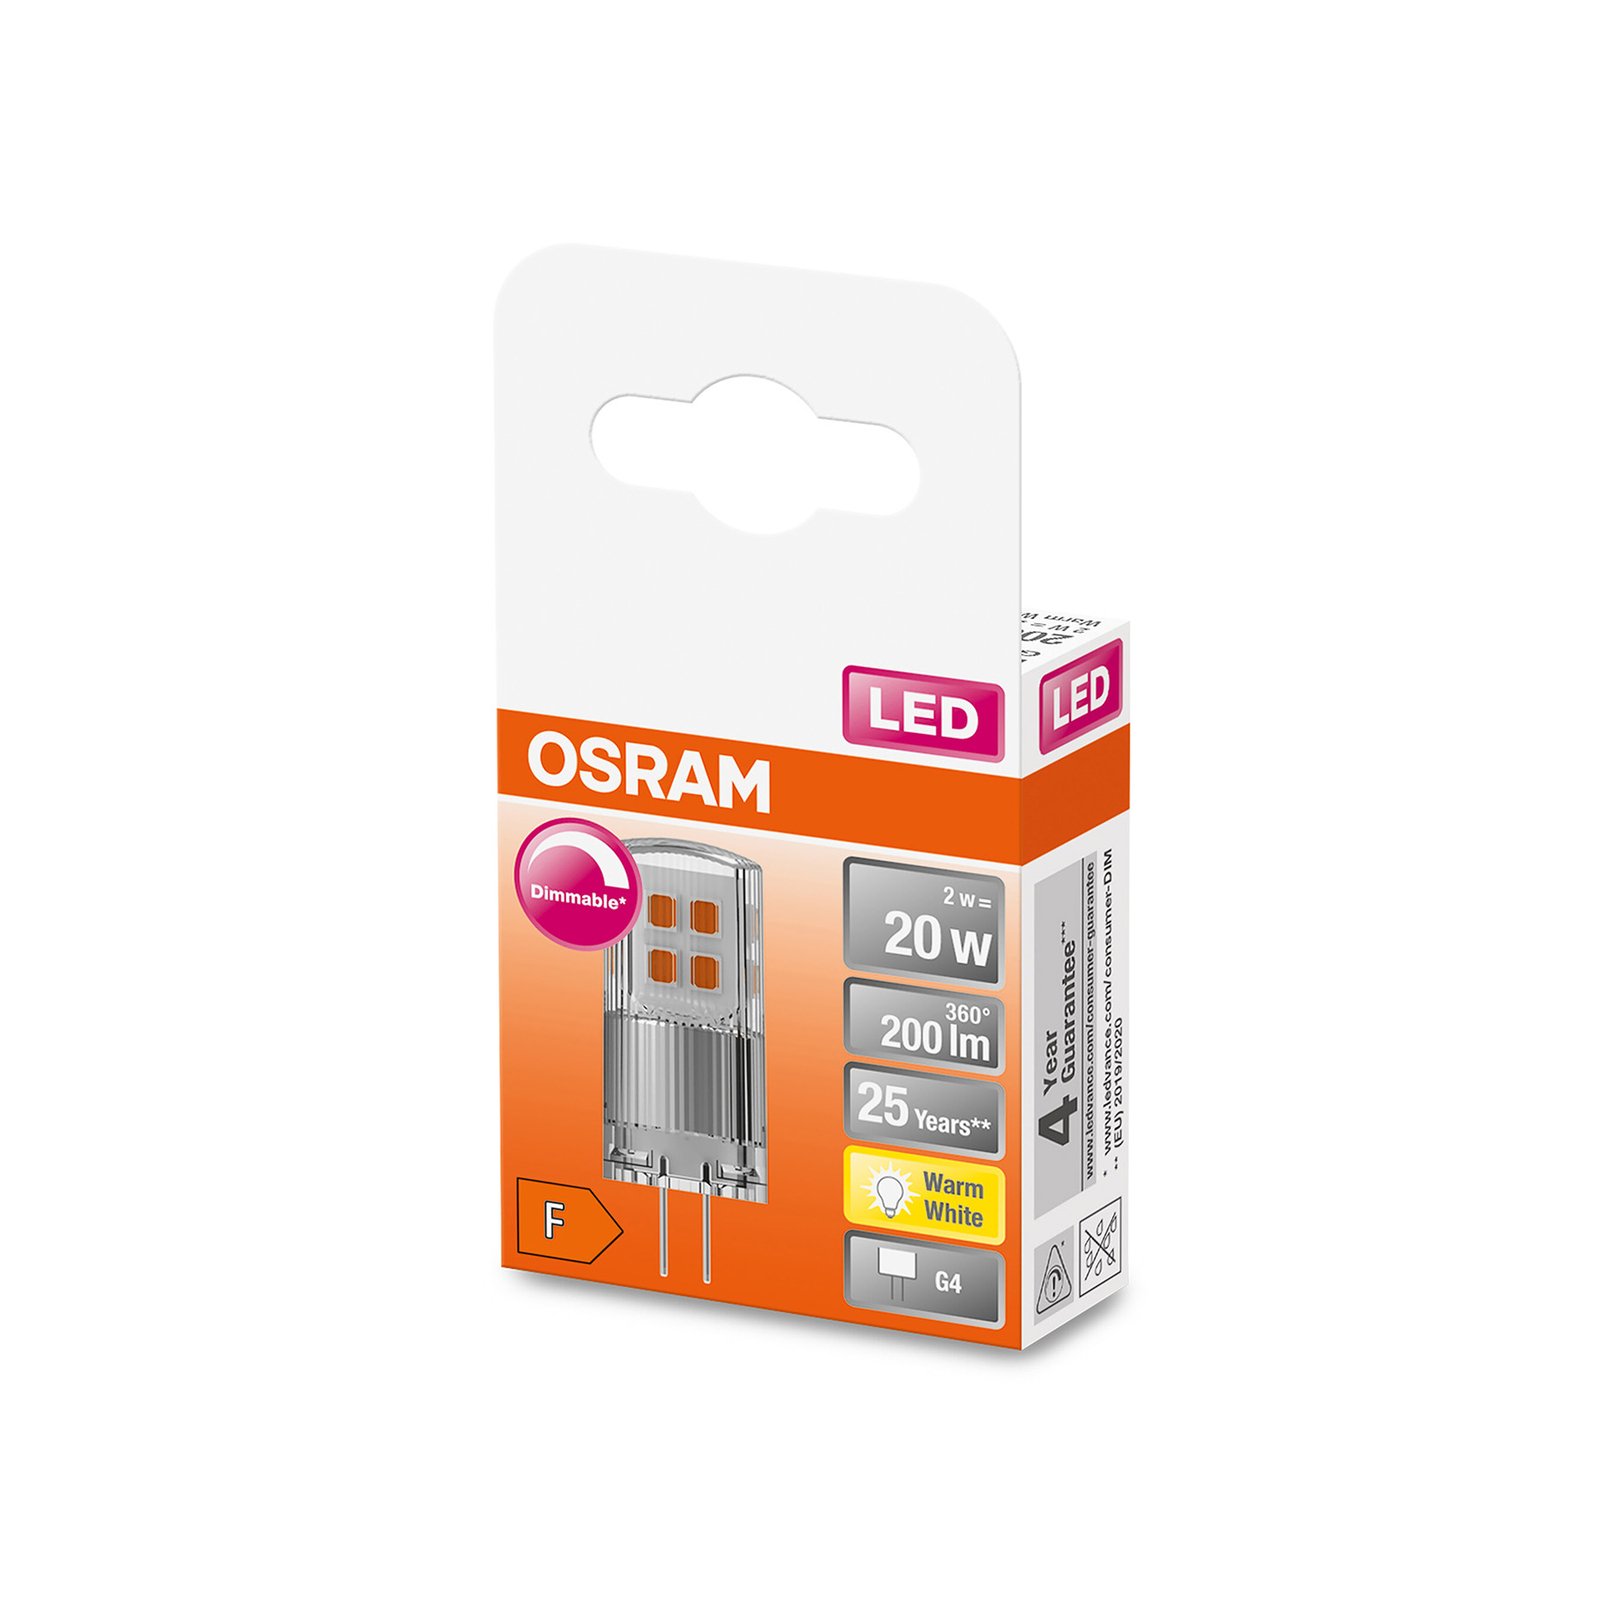 OSRAM PIN 12V bi-pin LED bulb G4 2W 200lm dimmable